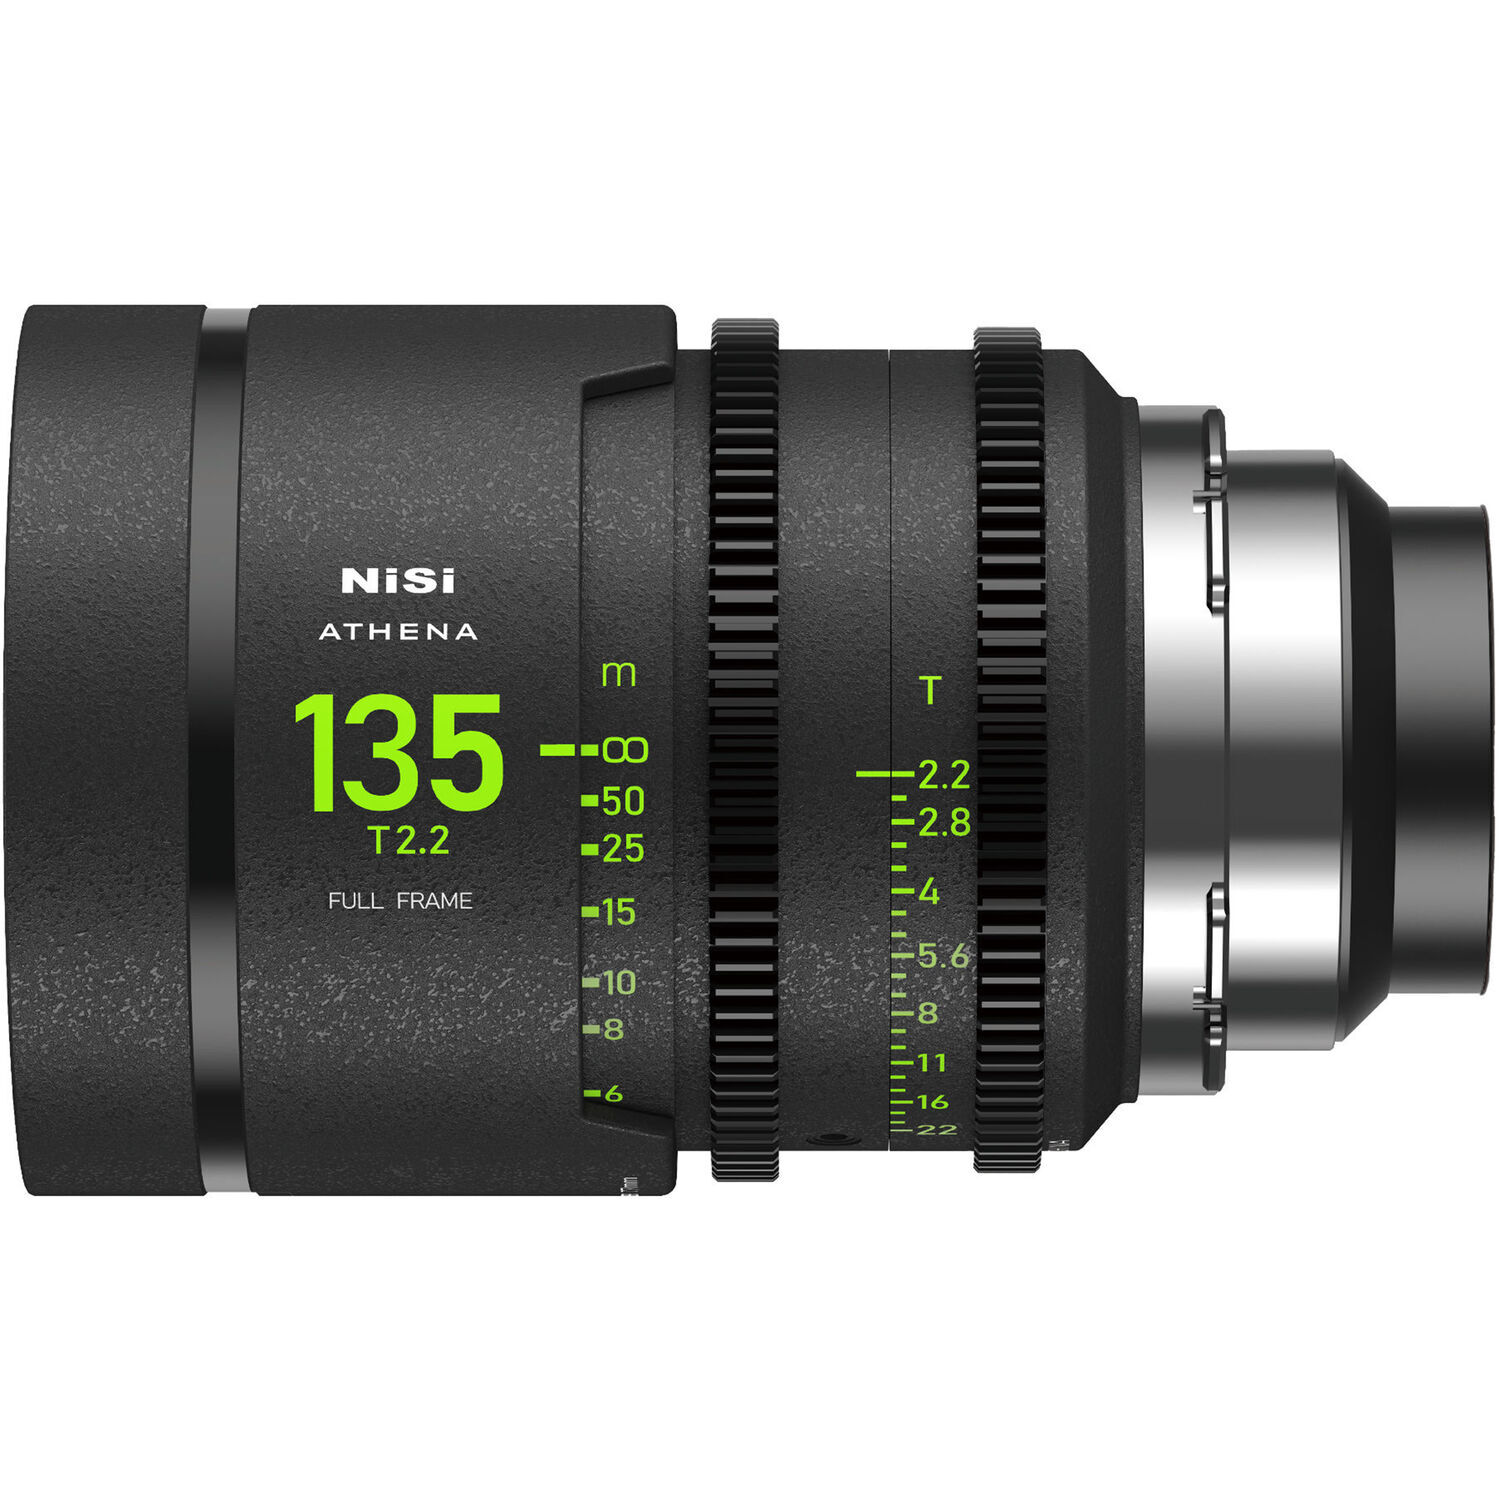 coming-soon-nisi-athena-prime-lens-135mm-t2-2-pl-mount